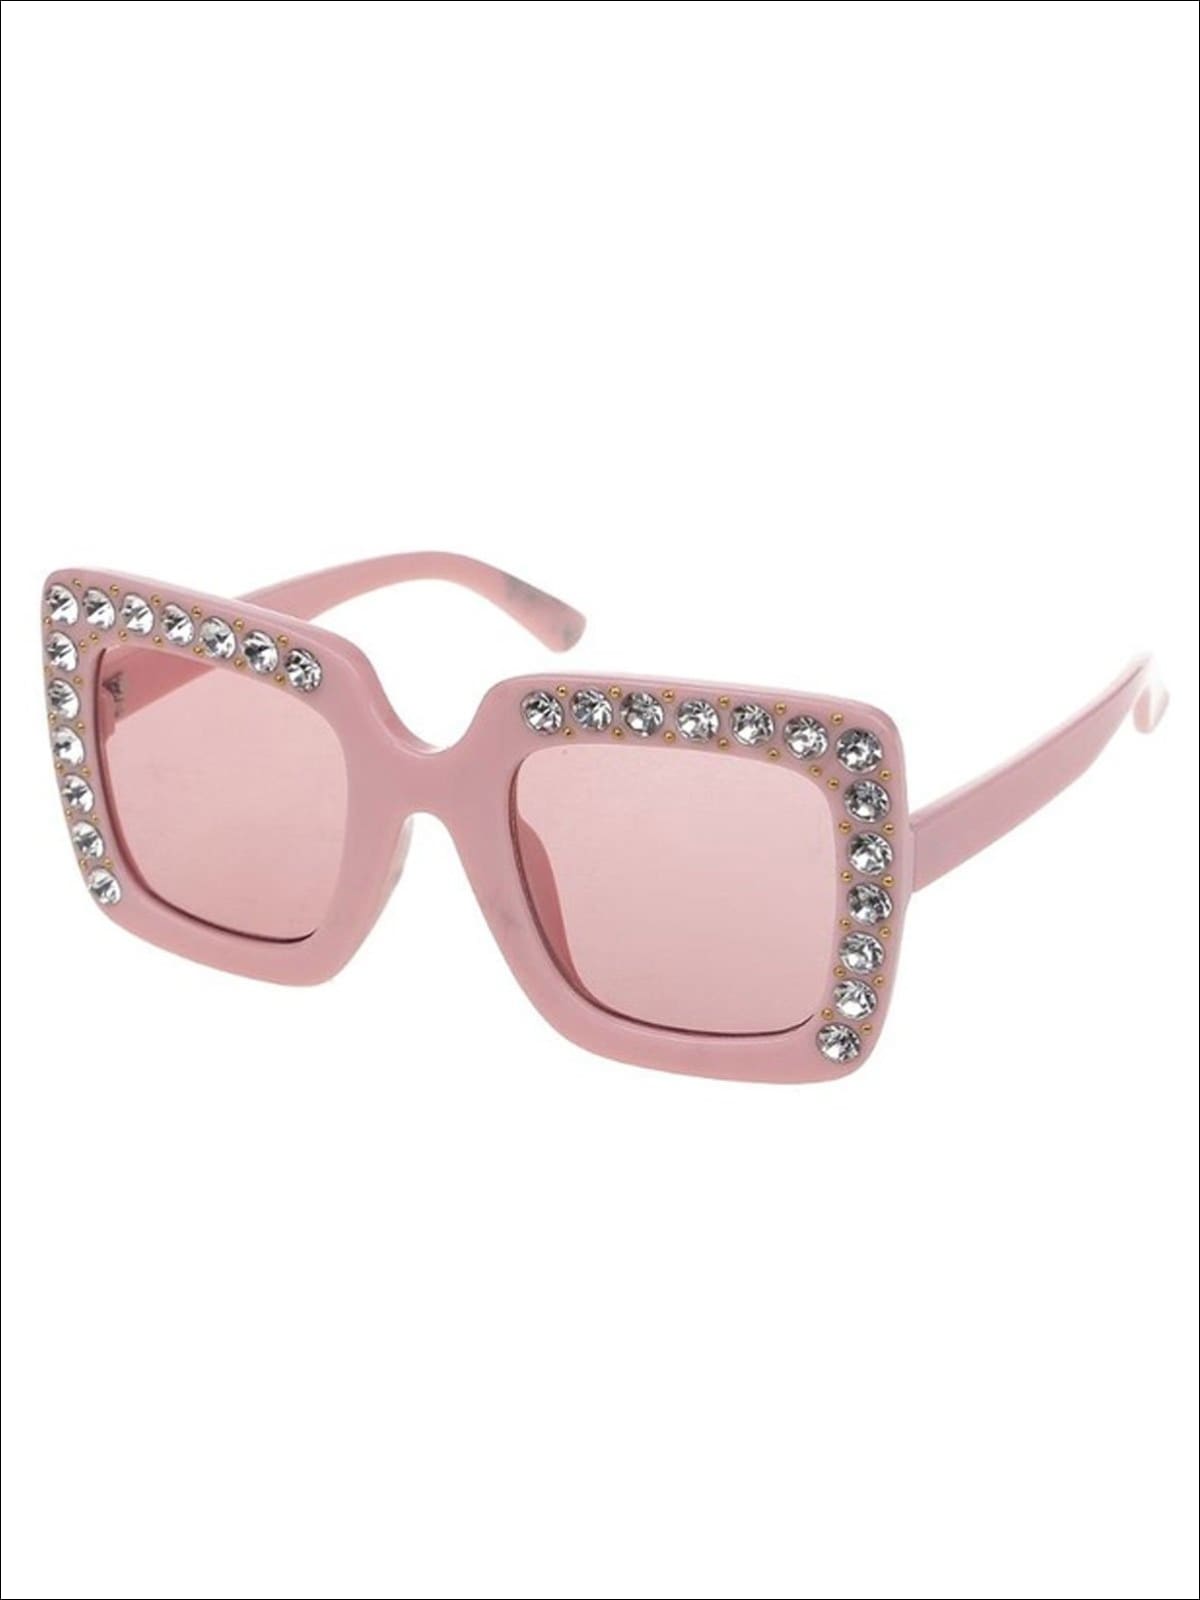 Girls Rhinestone Rimmed Sunglasses - Pink - Girls Accessories